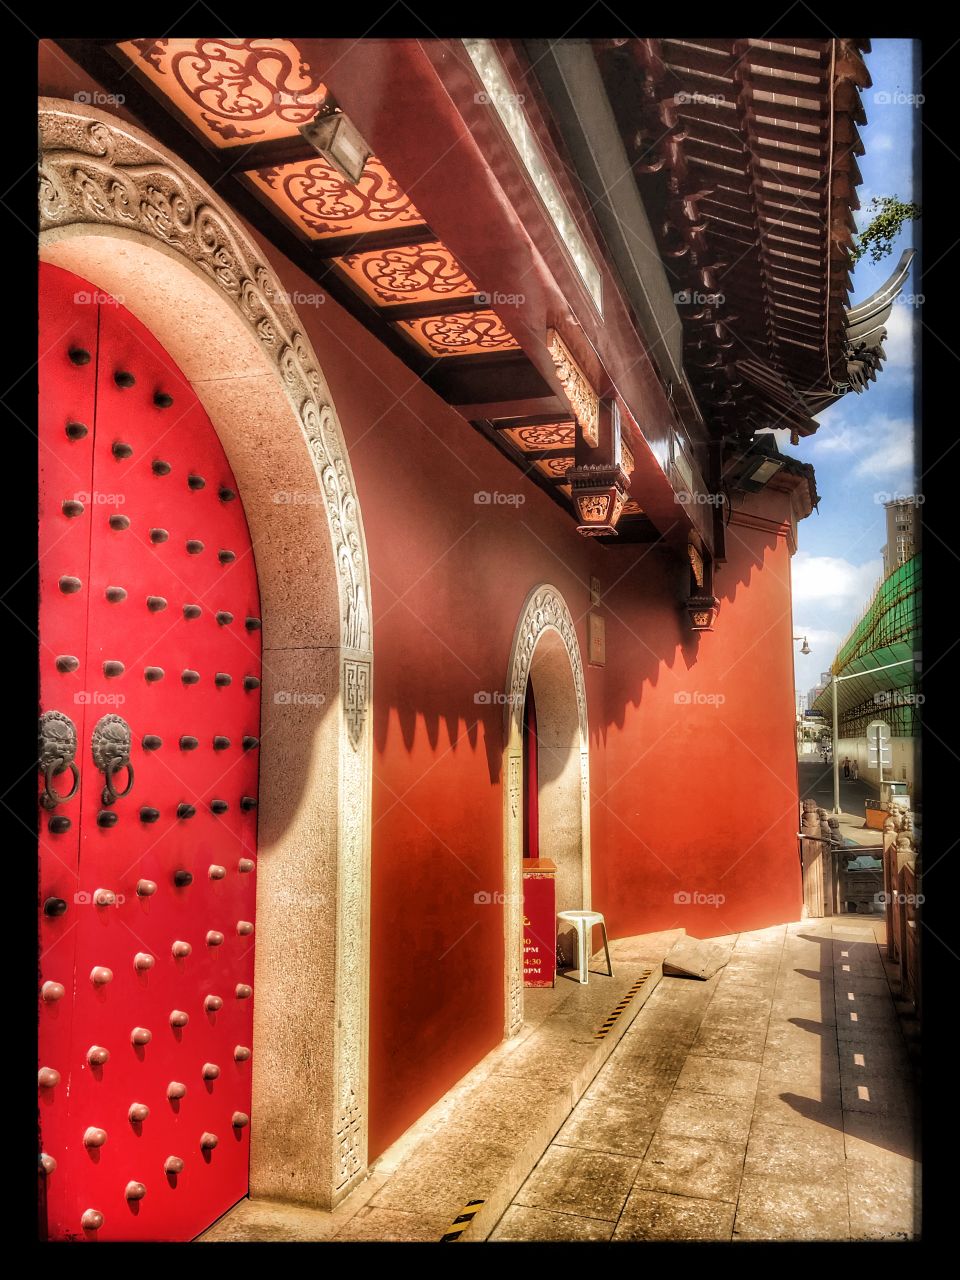 Temple Doors, Shanghai
上海佛寺